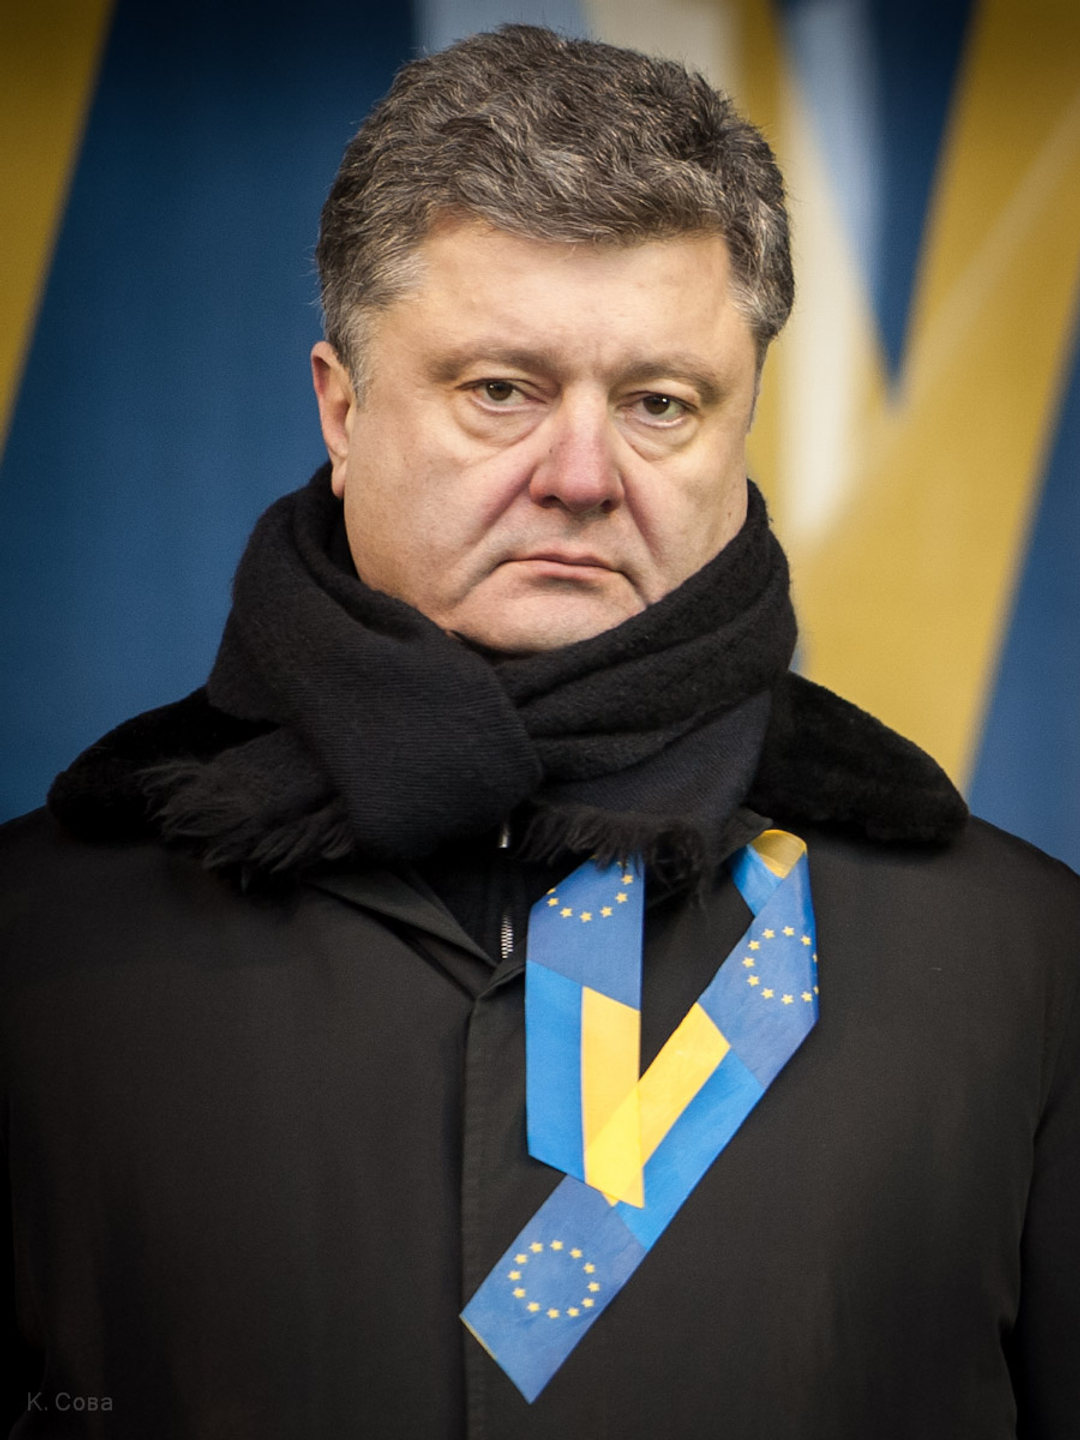 Petro Poroshenko how did he became famous